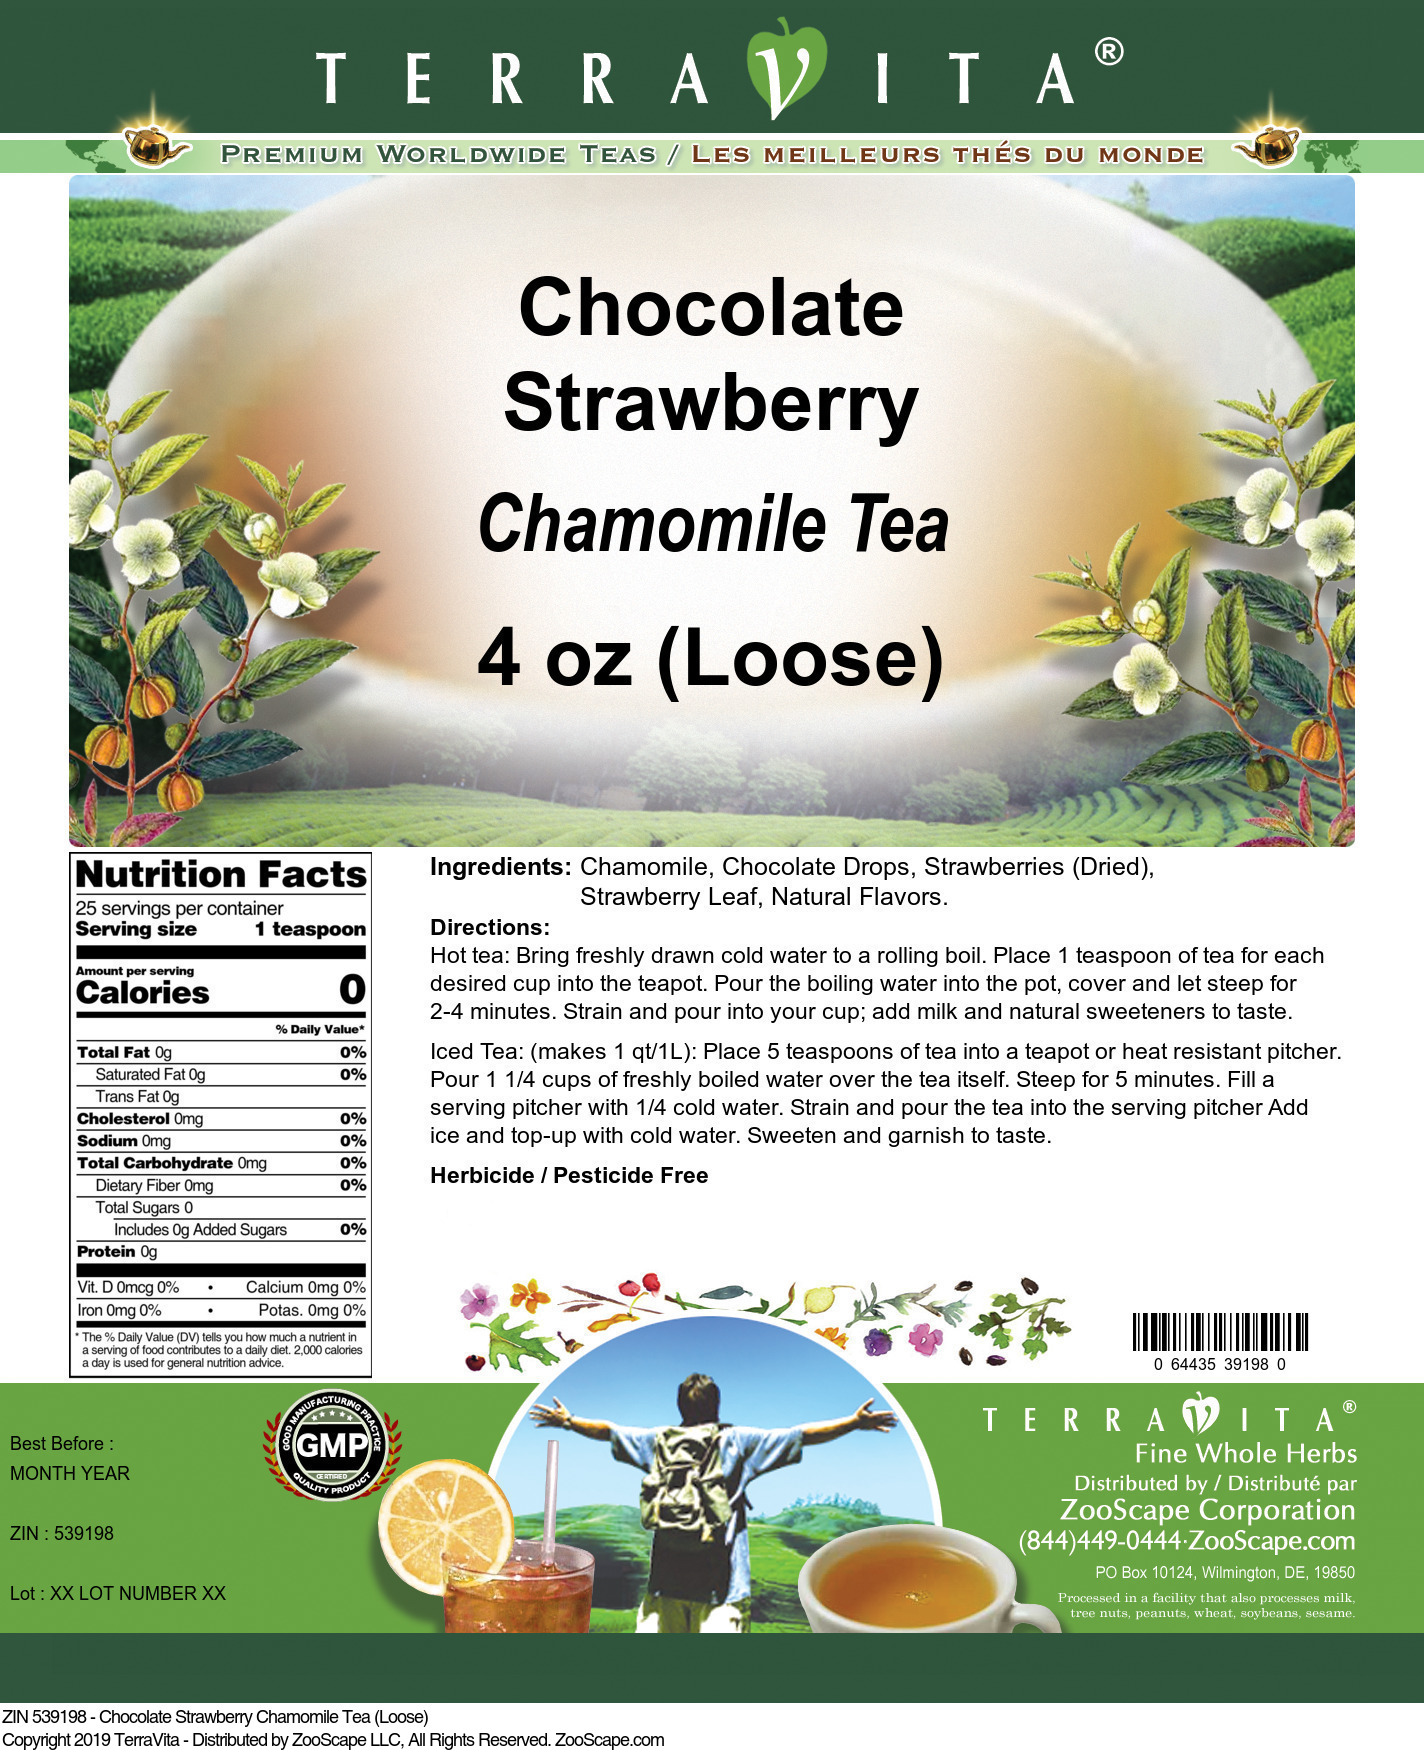 Chocolate Strawberry Chamomile Tea (Loose) - Label